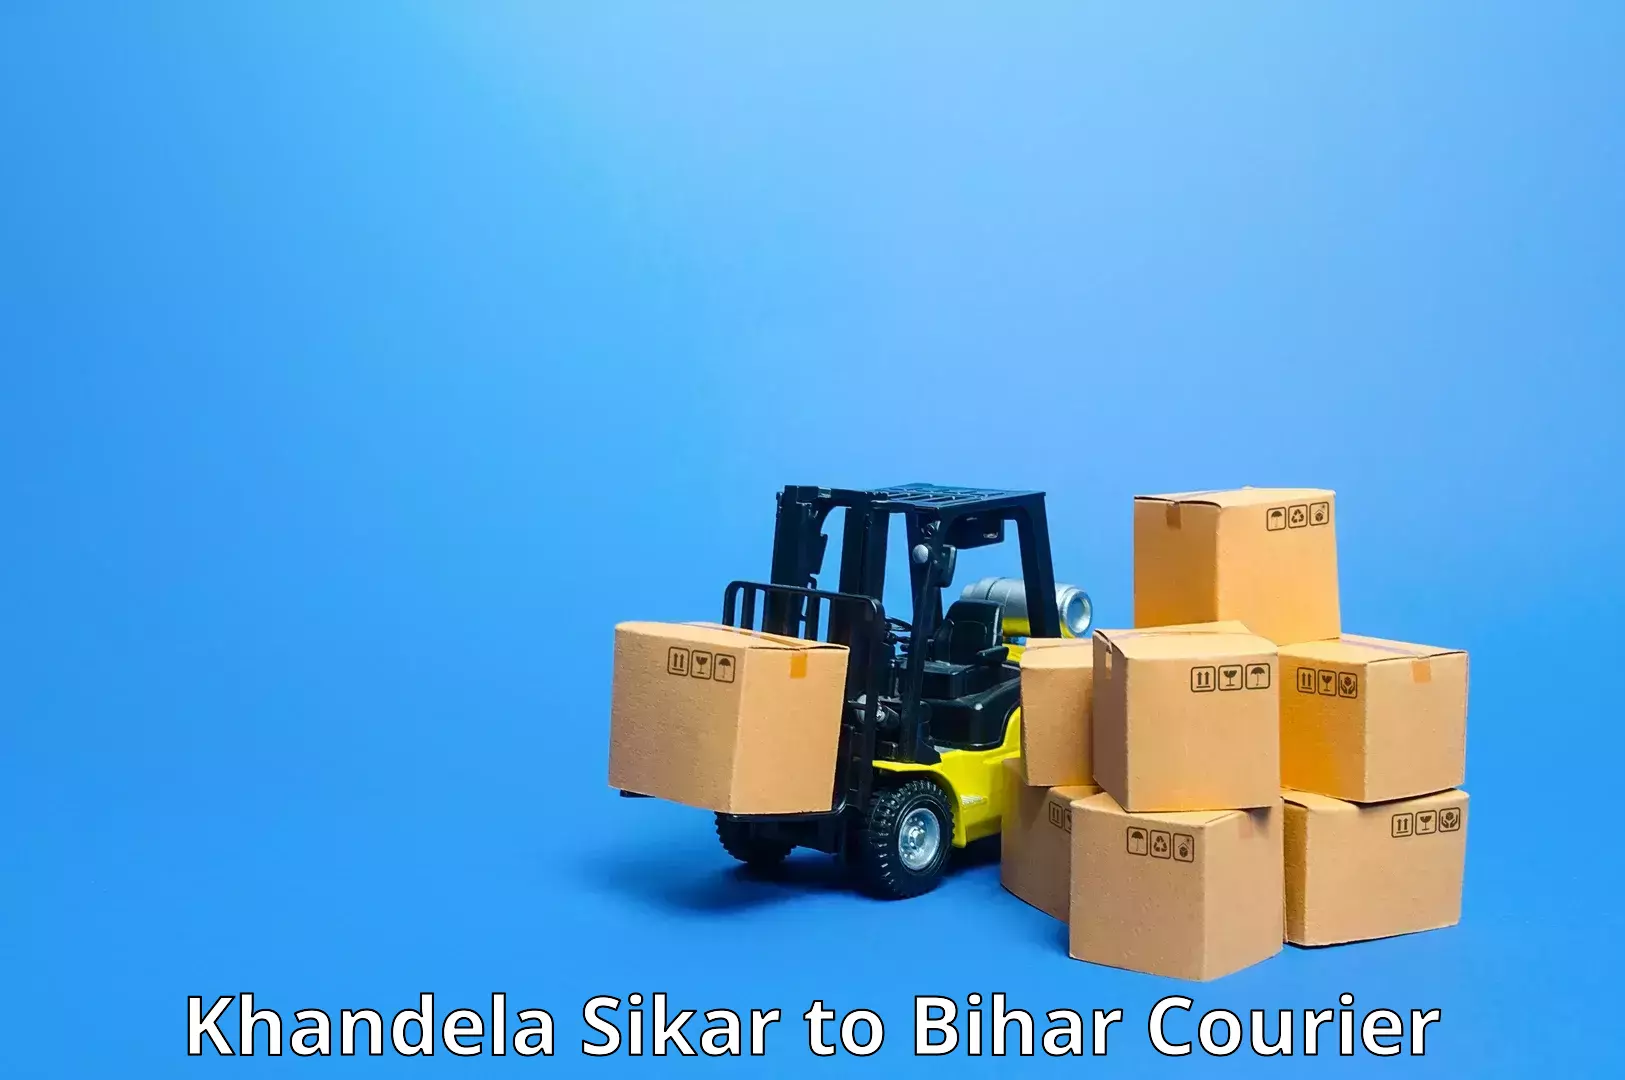 Reliable courier service Khandela Sikar to Bihar